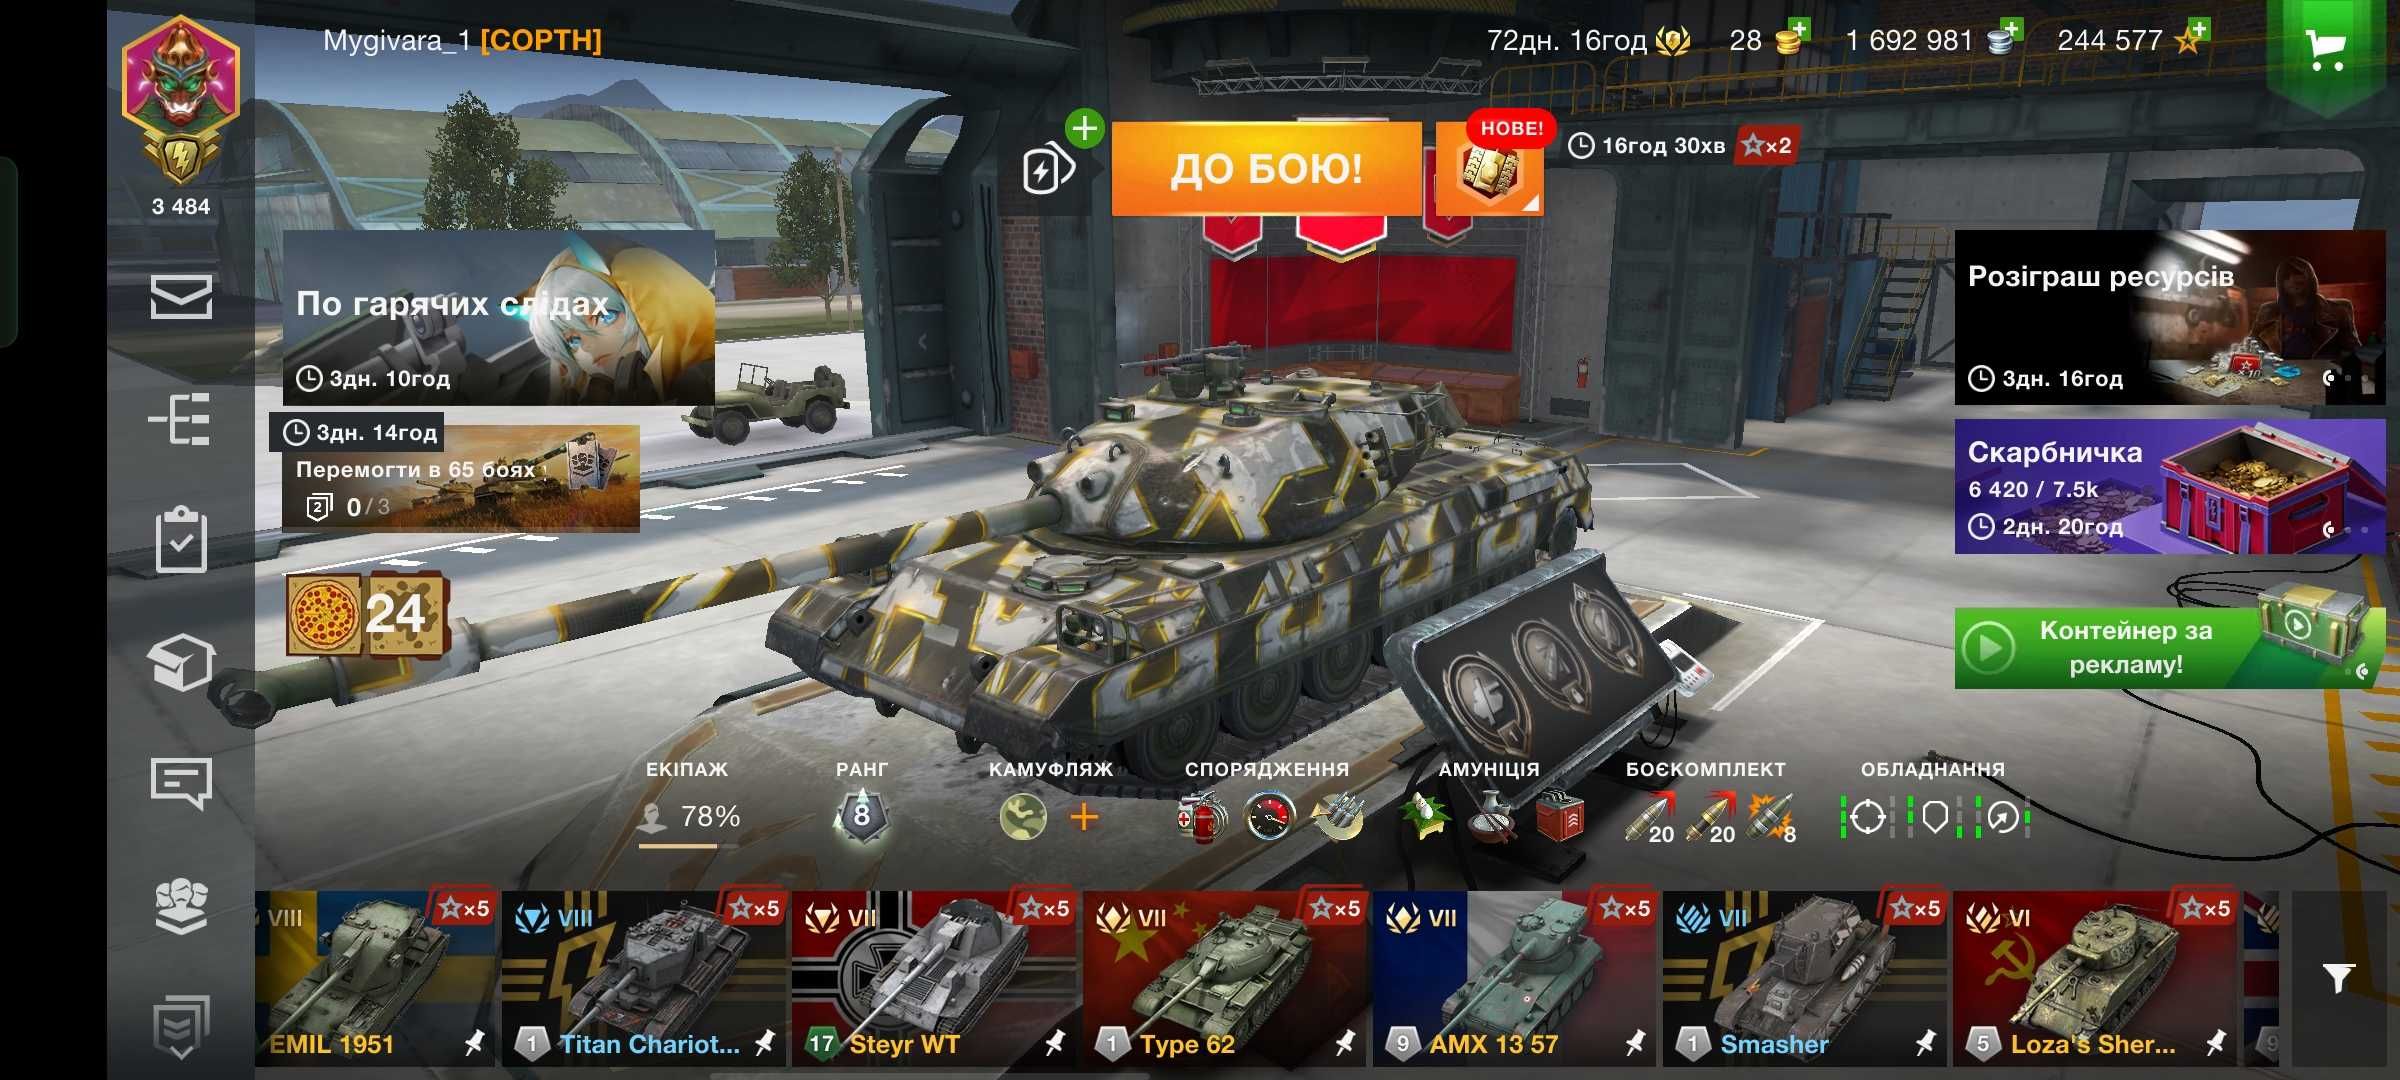 Акаунт в World of tanks